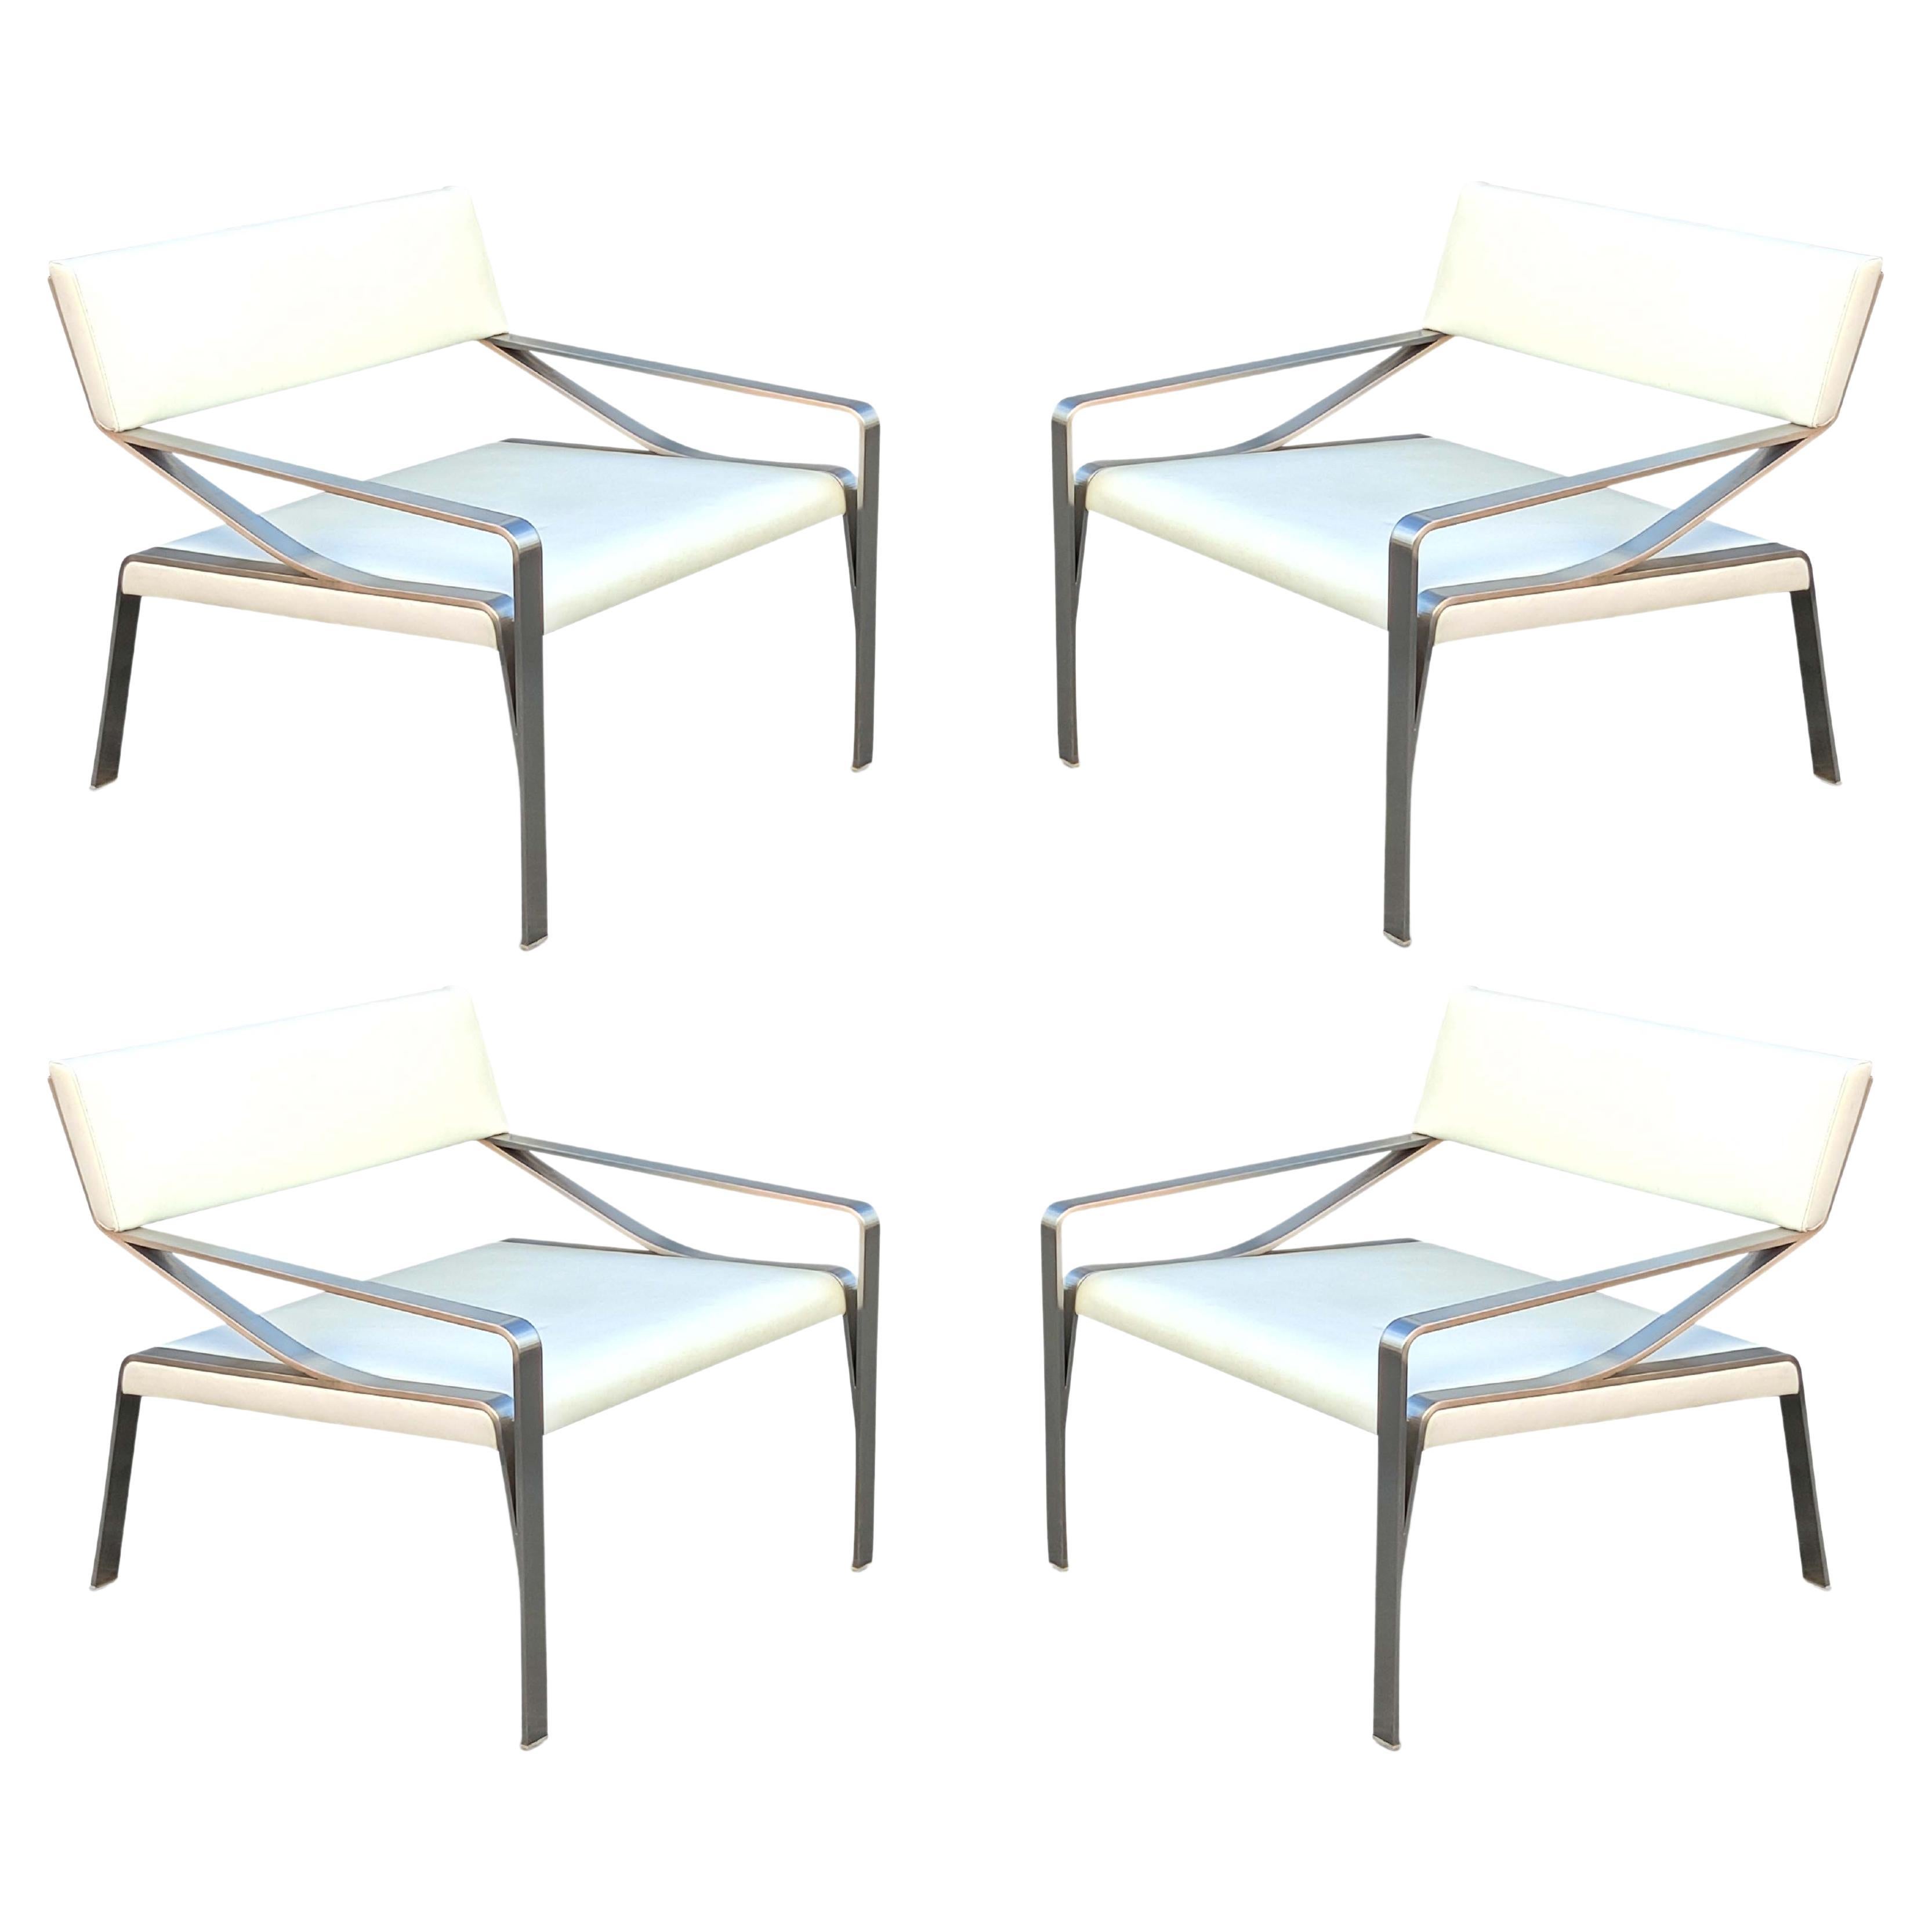 Bernhardt Design Four Sleek Mid Century Lounge Chairs Stainless Steel Leather